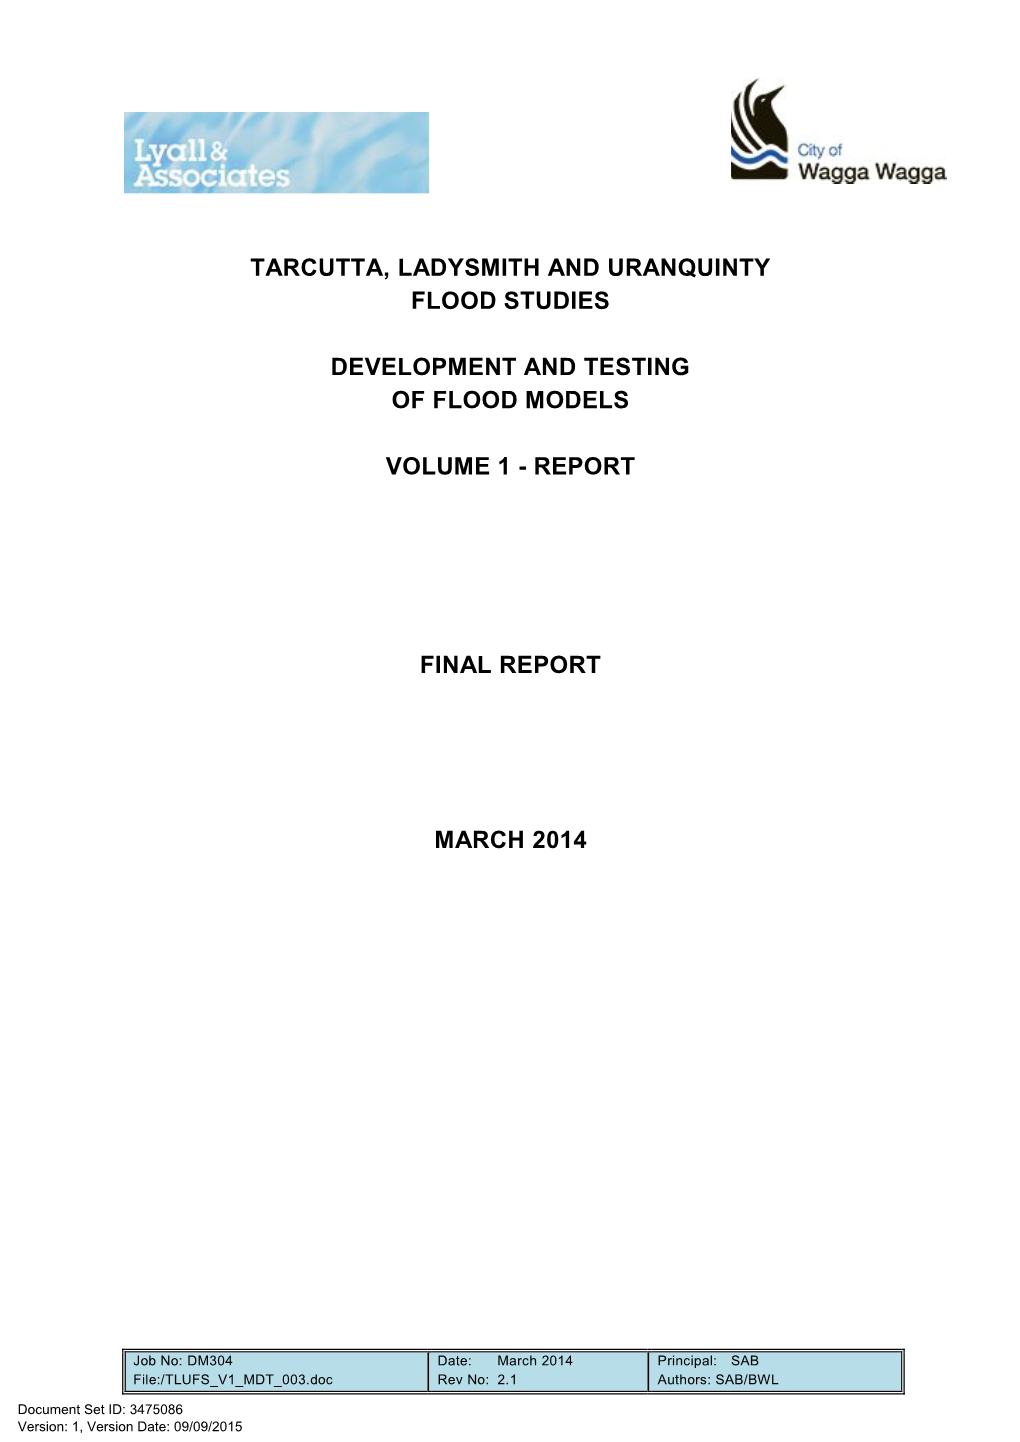 Tarcutta, Ladysmith and Uranquinty Flood Studies Development and Testing of Flood Models